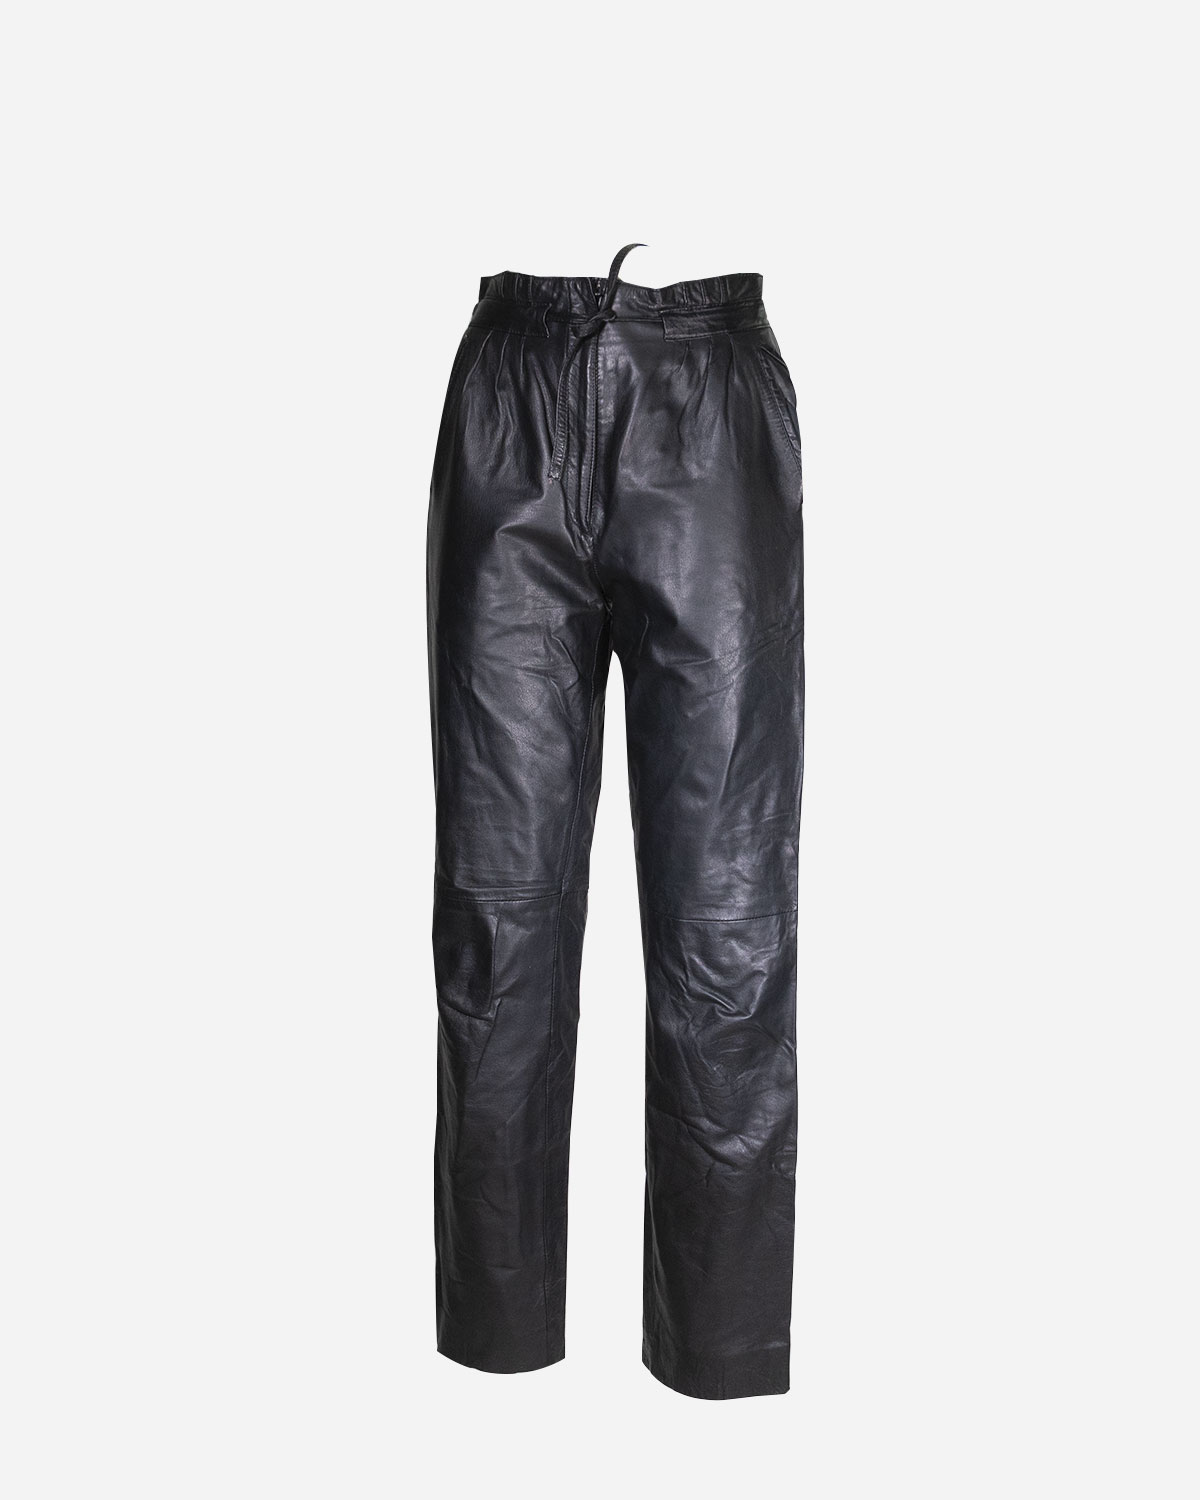 Women’s leather pants: 4 pieces